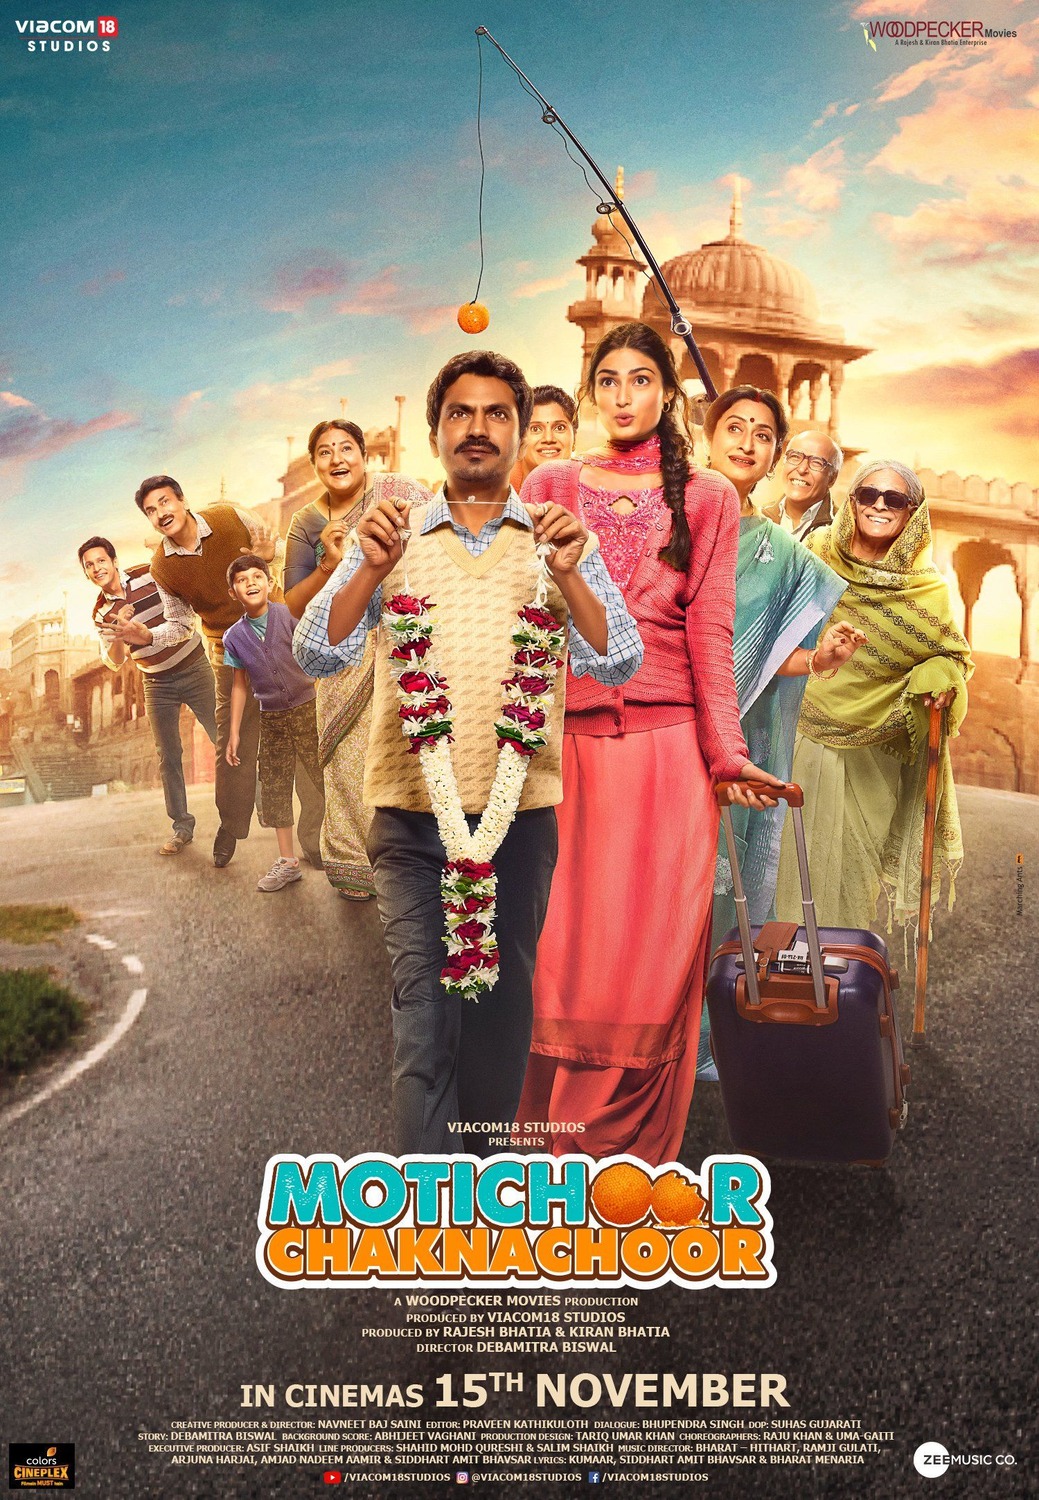 Extra Large Movie Poster Image for Motichoor Chaknachoor (#4 of 4)